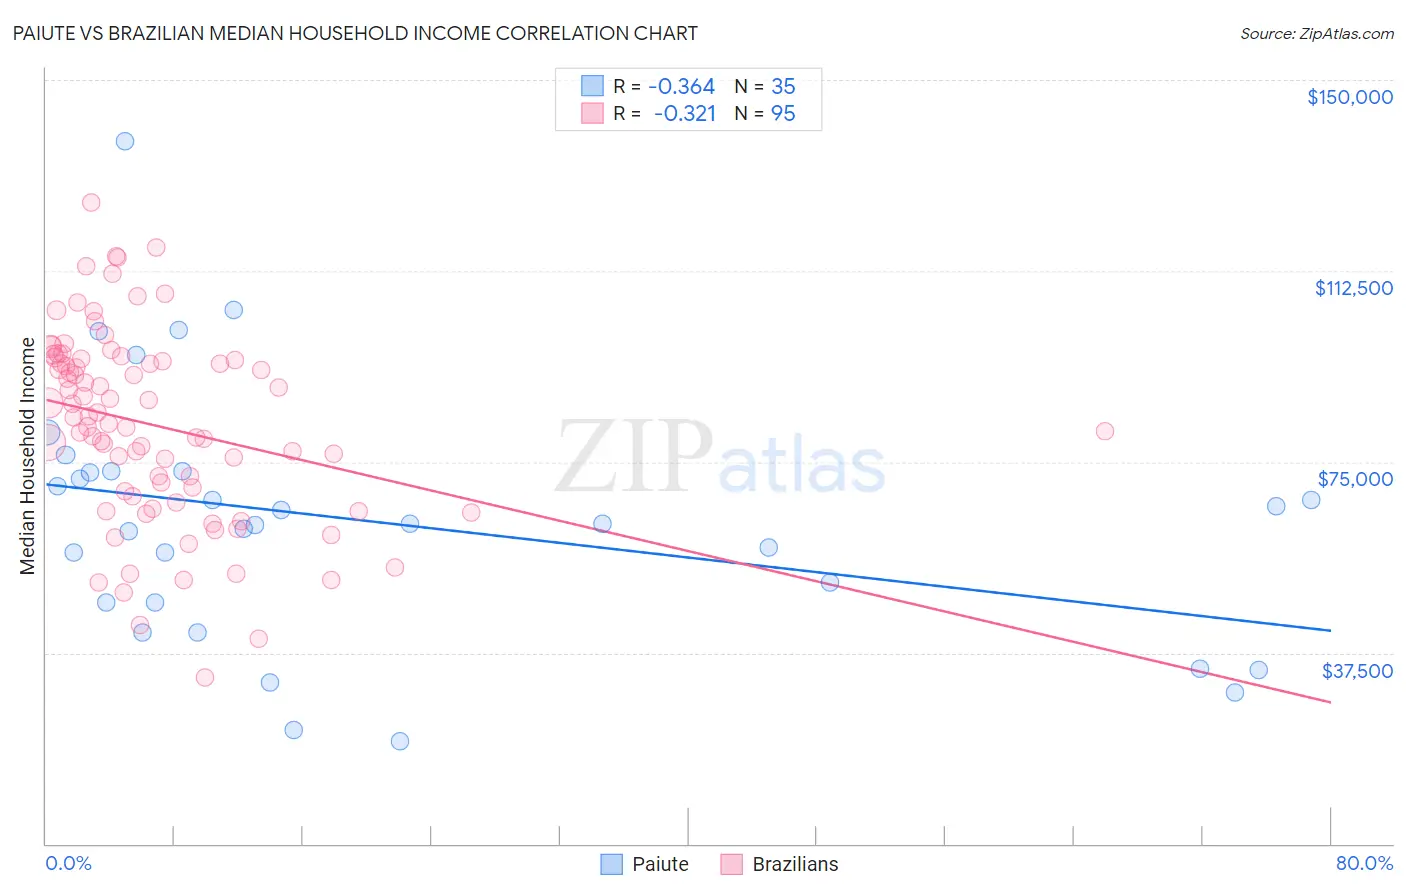 Paiute vs Brazilian Median Household Income